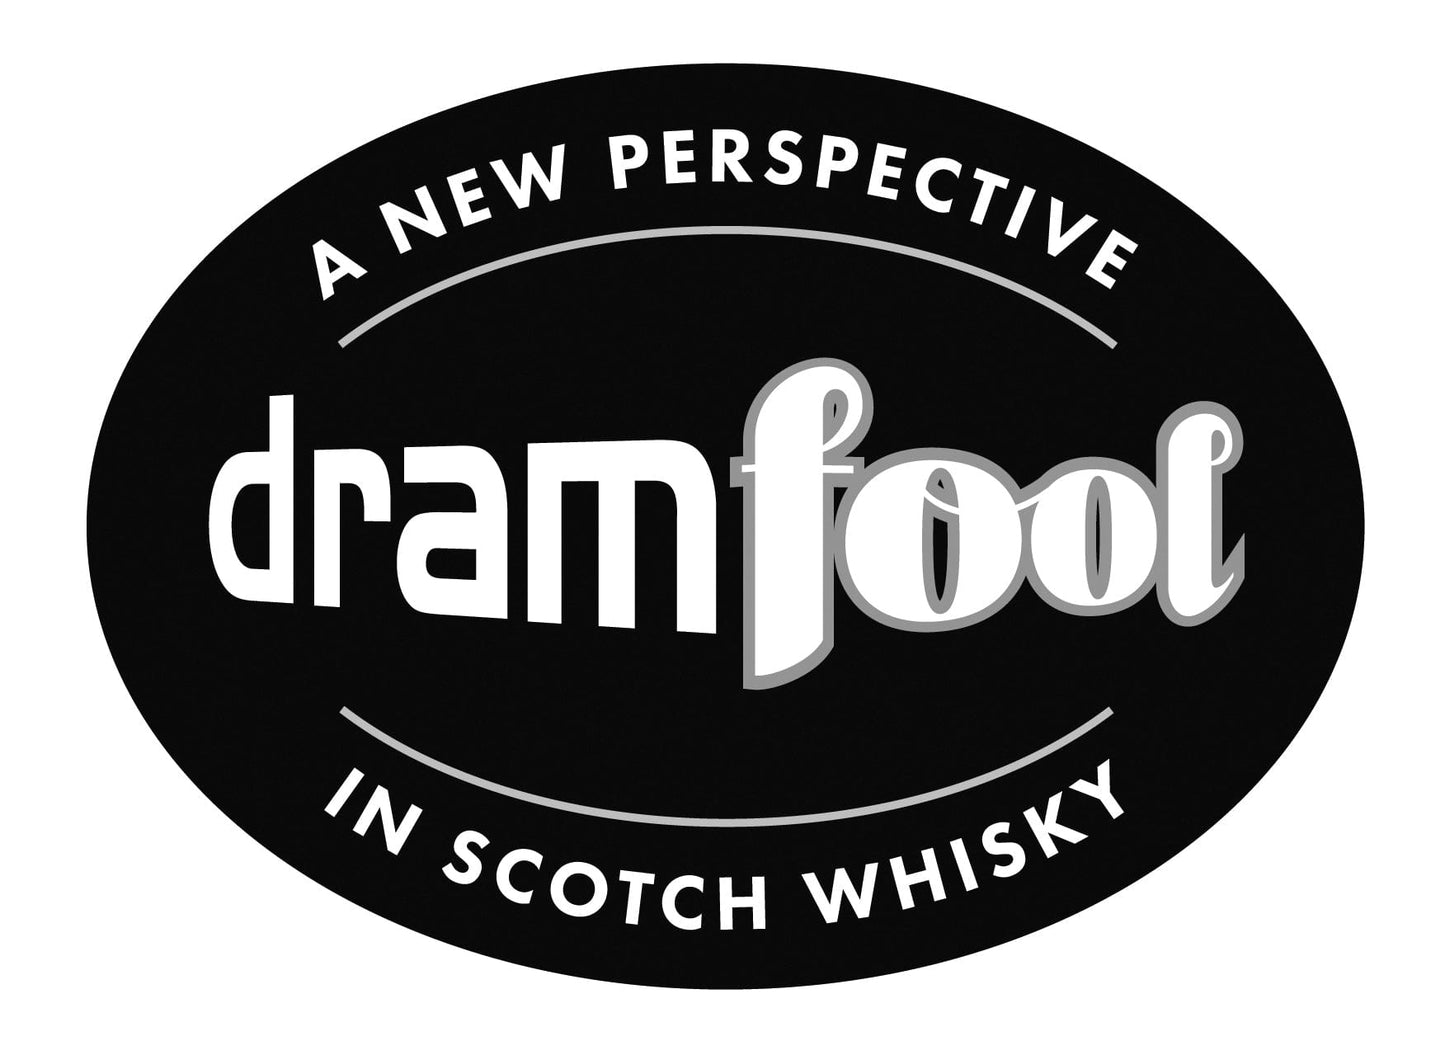 Whisky Écossais Dramfool Glenmarvellous #1 9 year old Oloroso Sherry Barrel - Whiskylander